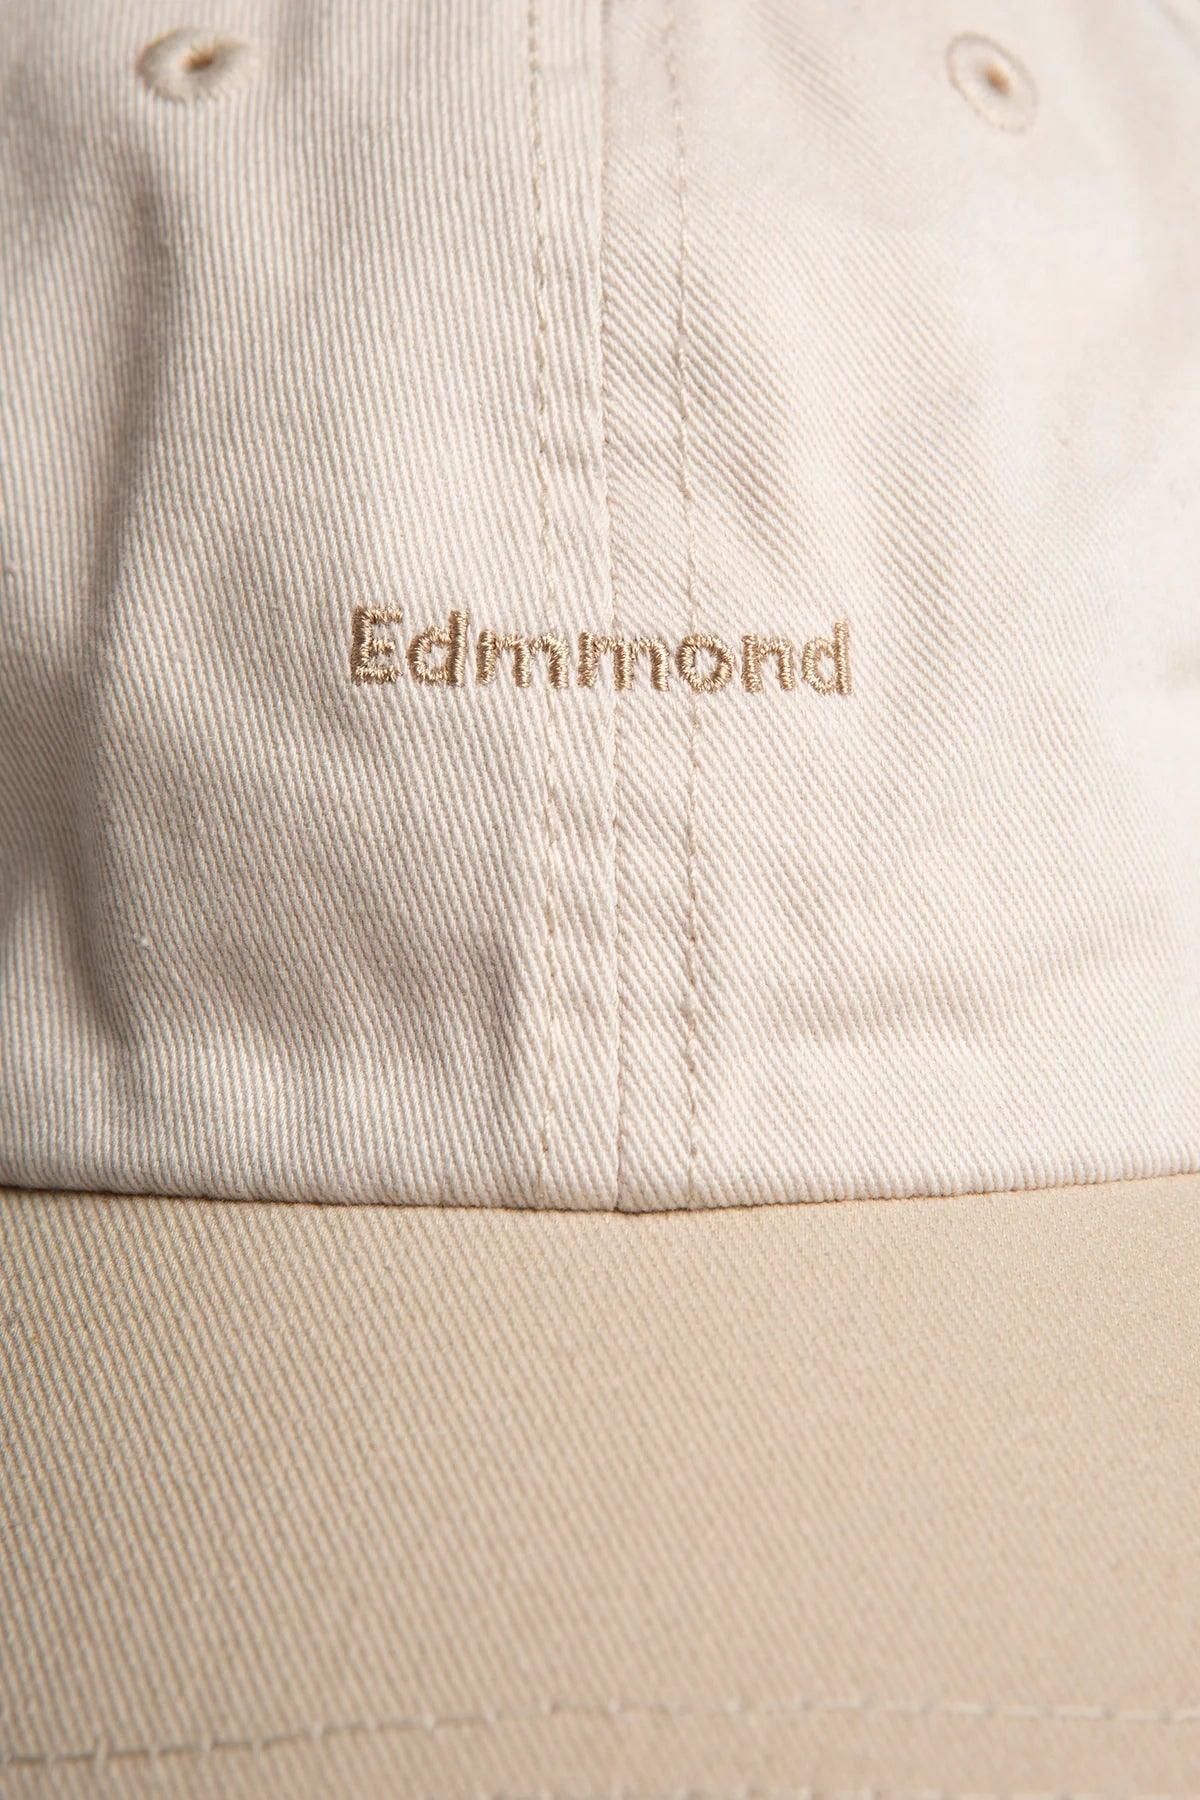 Gorra Edmmond Studios Logo Bicolor Plain Off White - ECRU